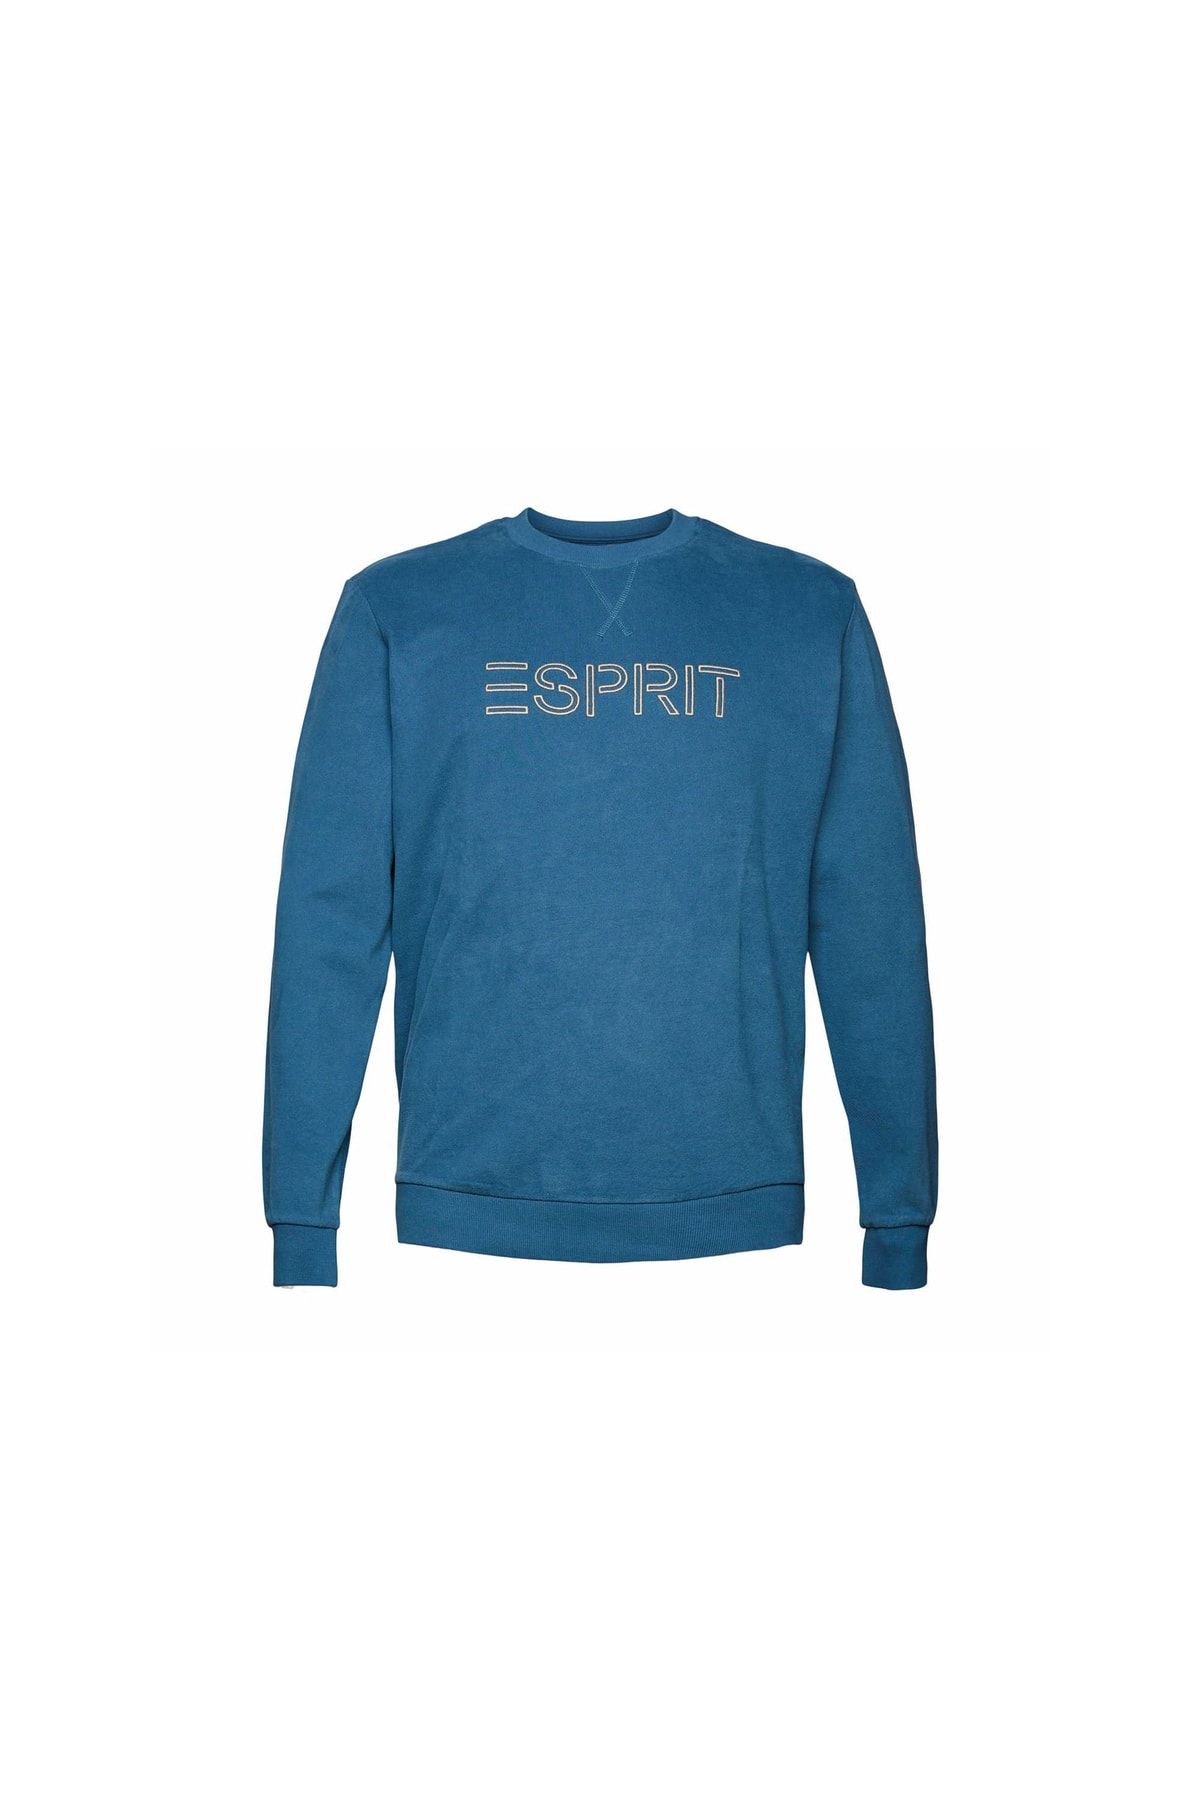 Esprit - Fit Trendyol Regular Pullover Blau - -